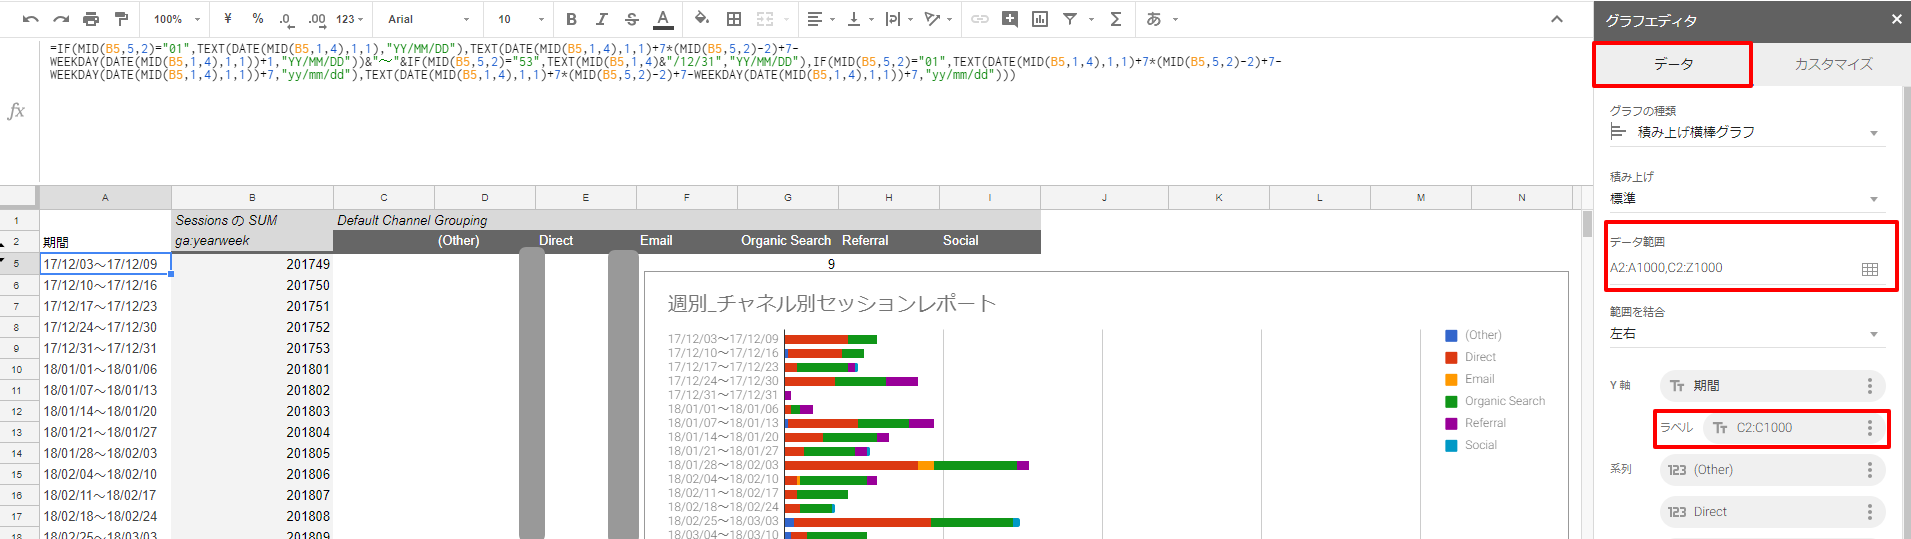 google_analytics_spreadsheet_report_02_05-1